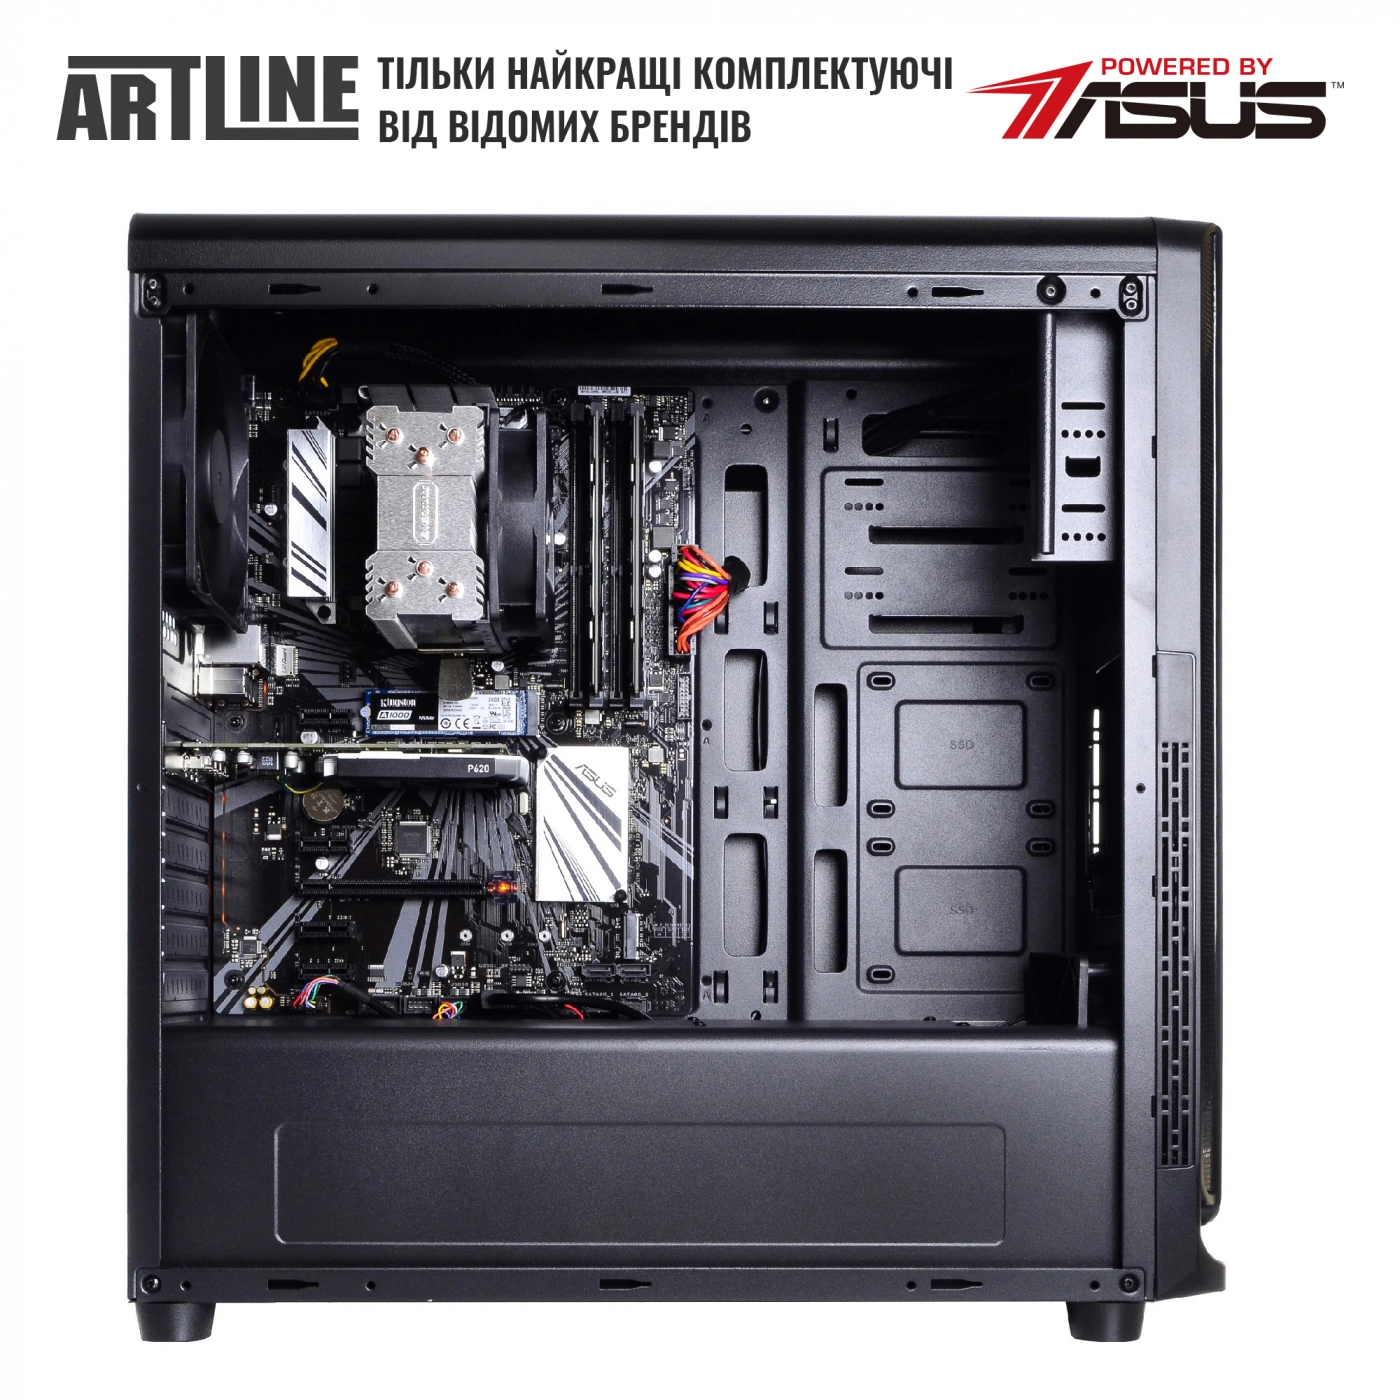 Купити Сервер ARTLINE Business T17v18 - фото 5